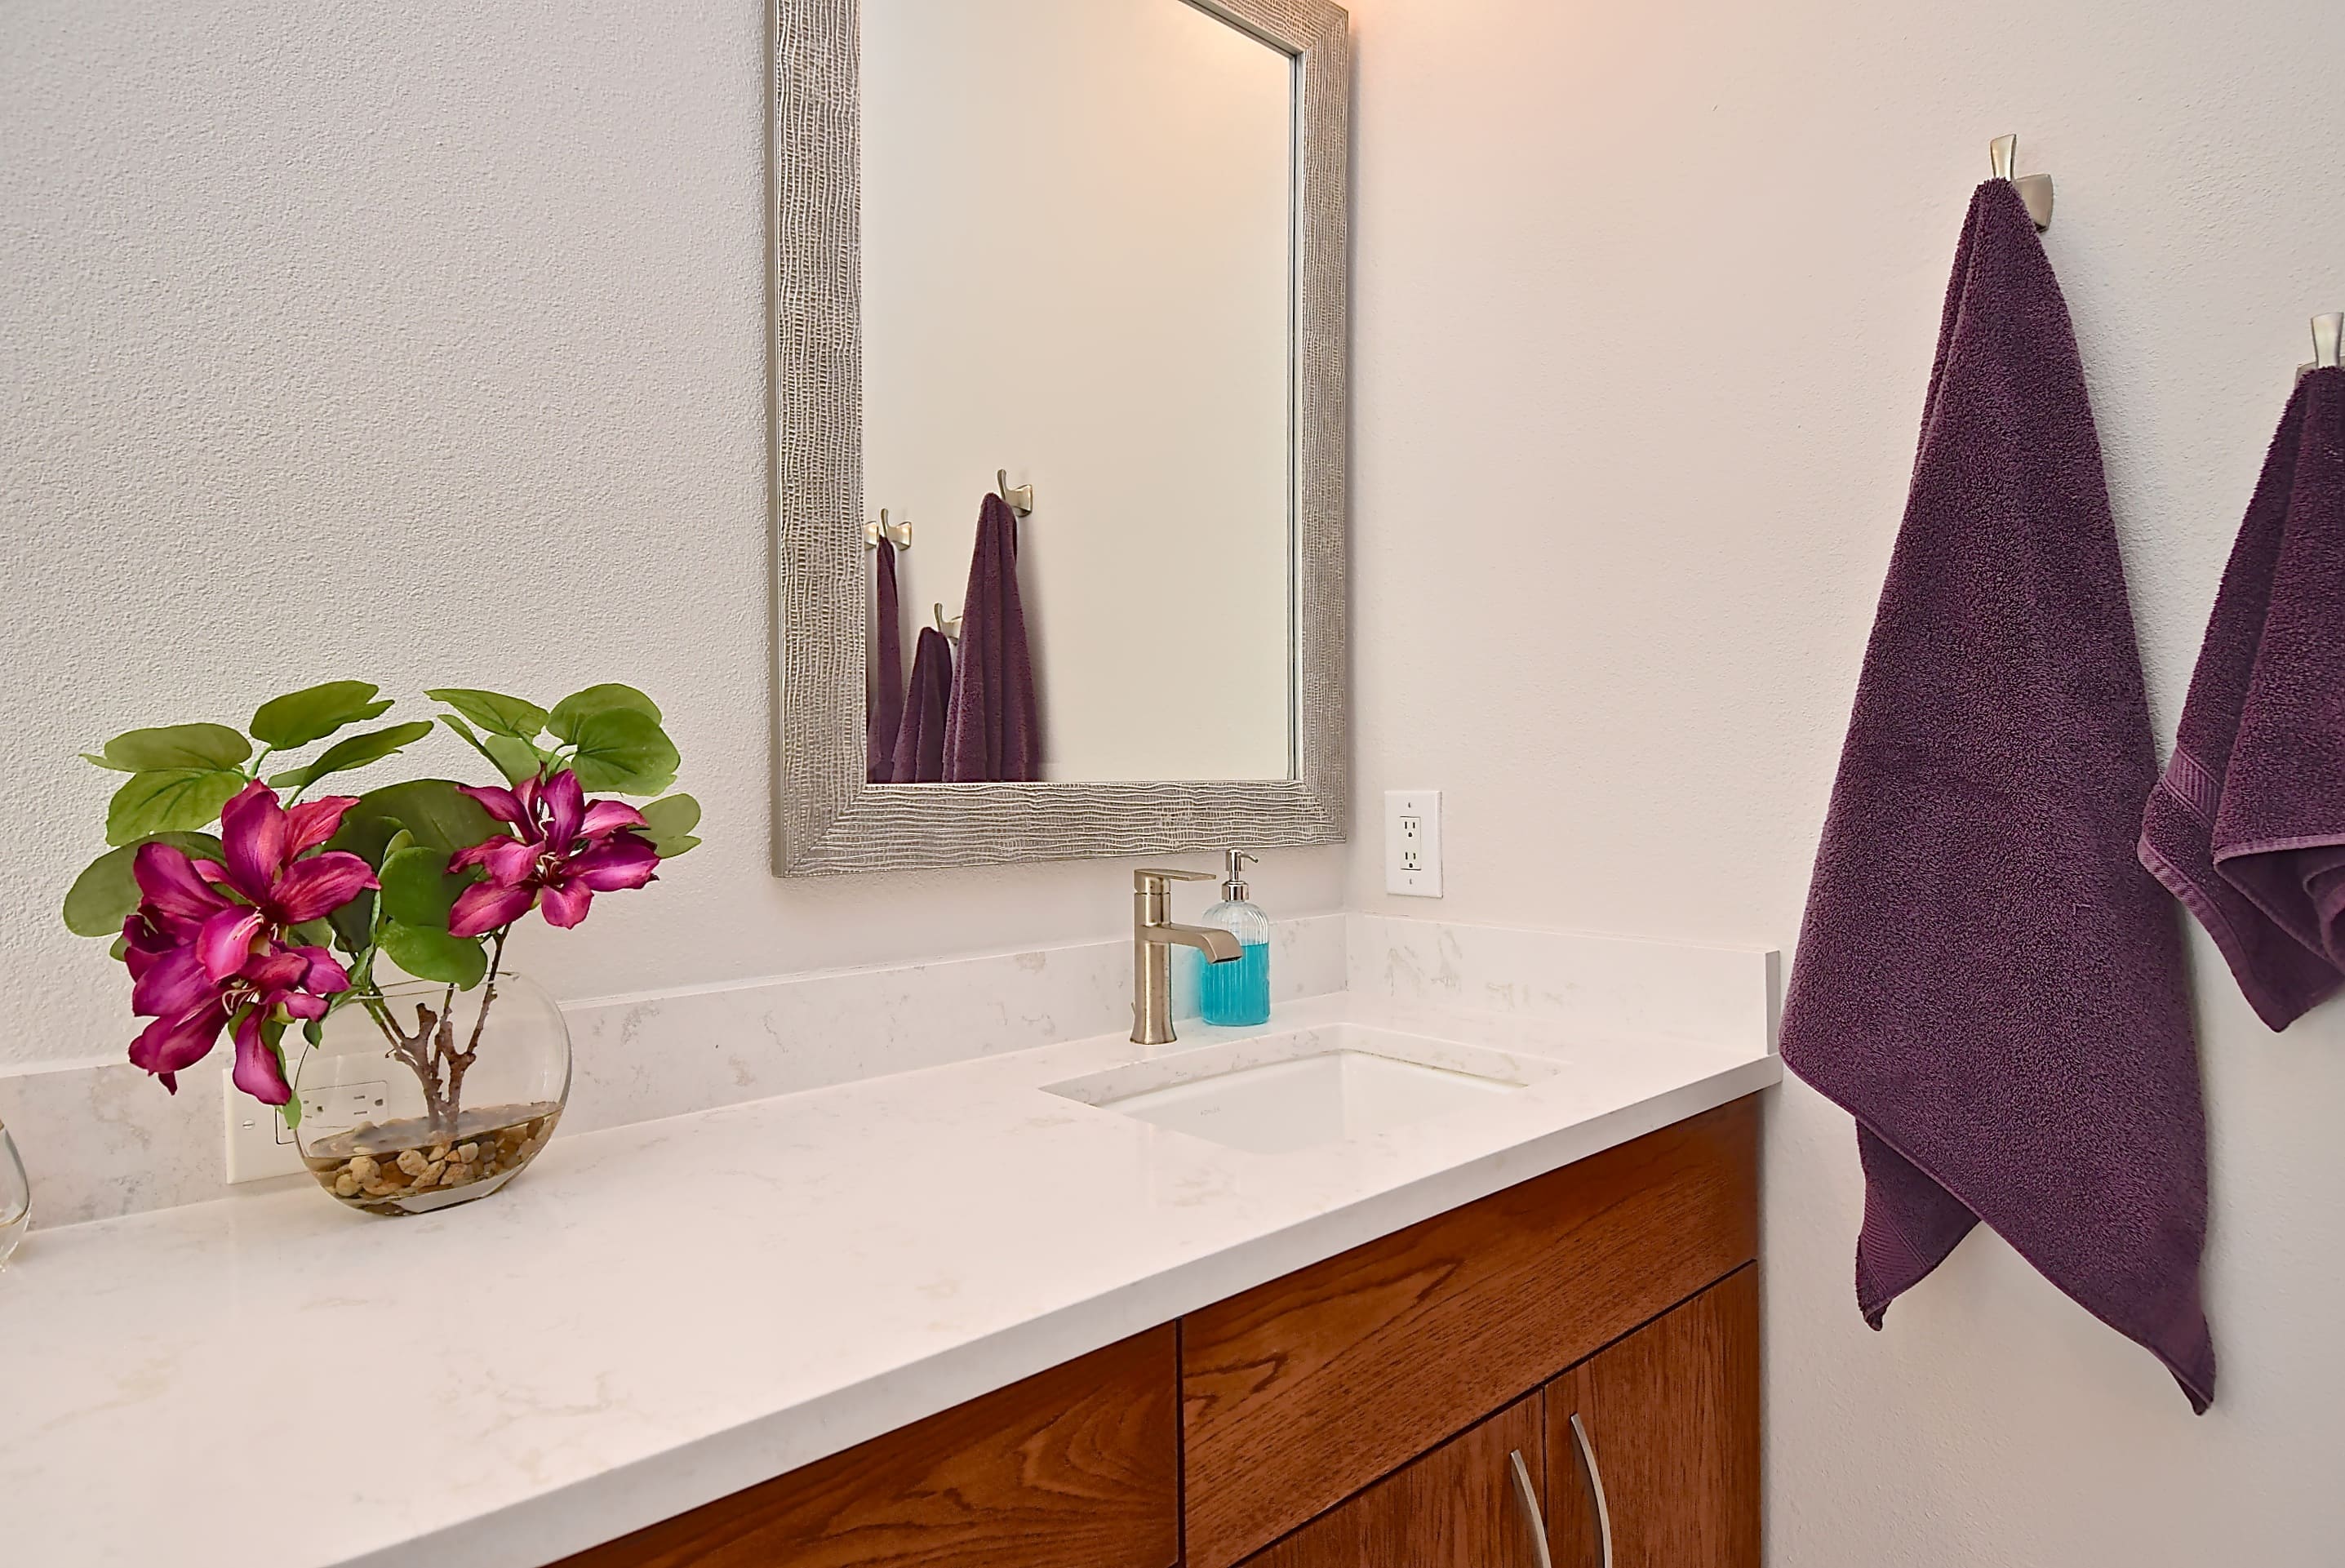 Double Mirror in Sarasota Bathroom Remodel with Towel Hooks and Warm Wood Vanity Franz